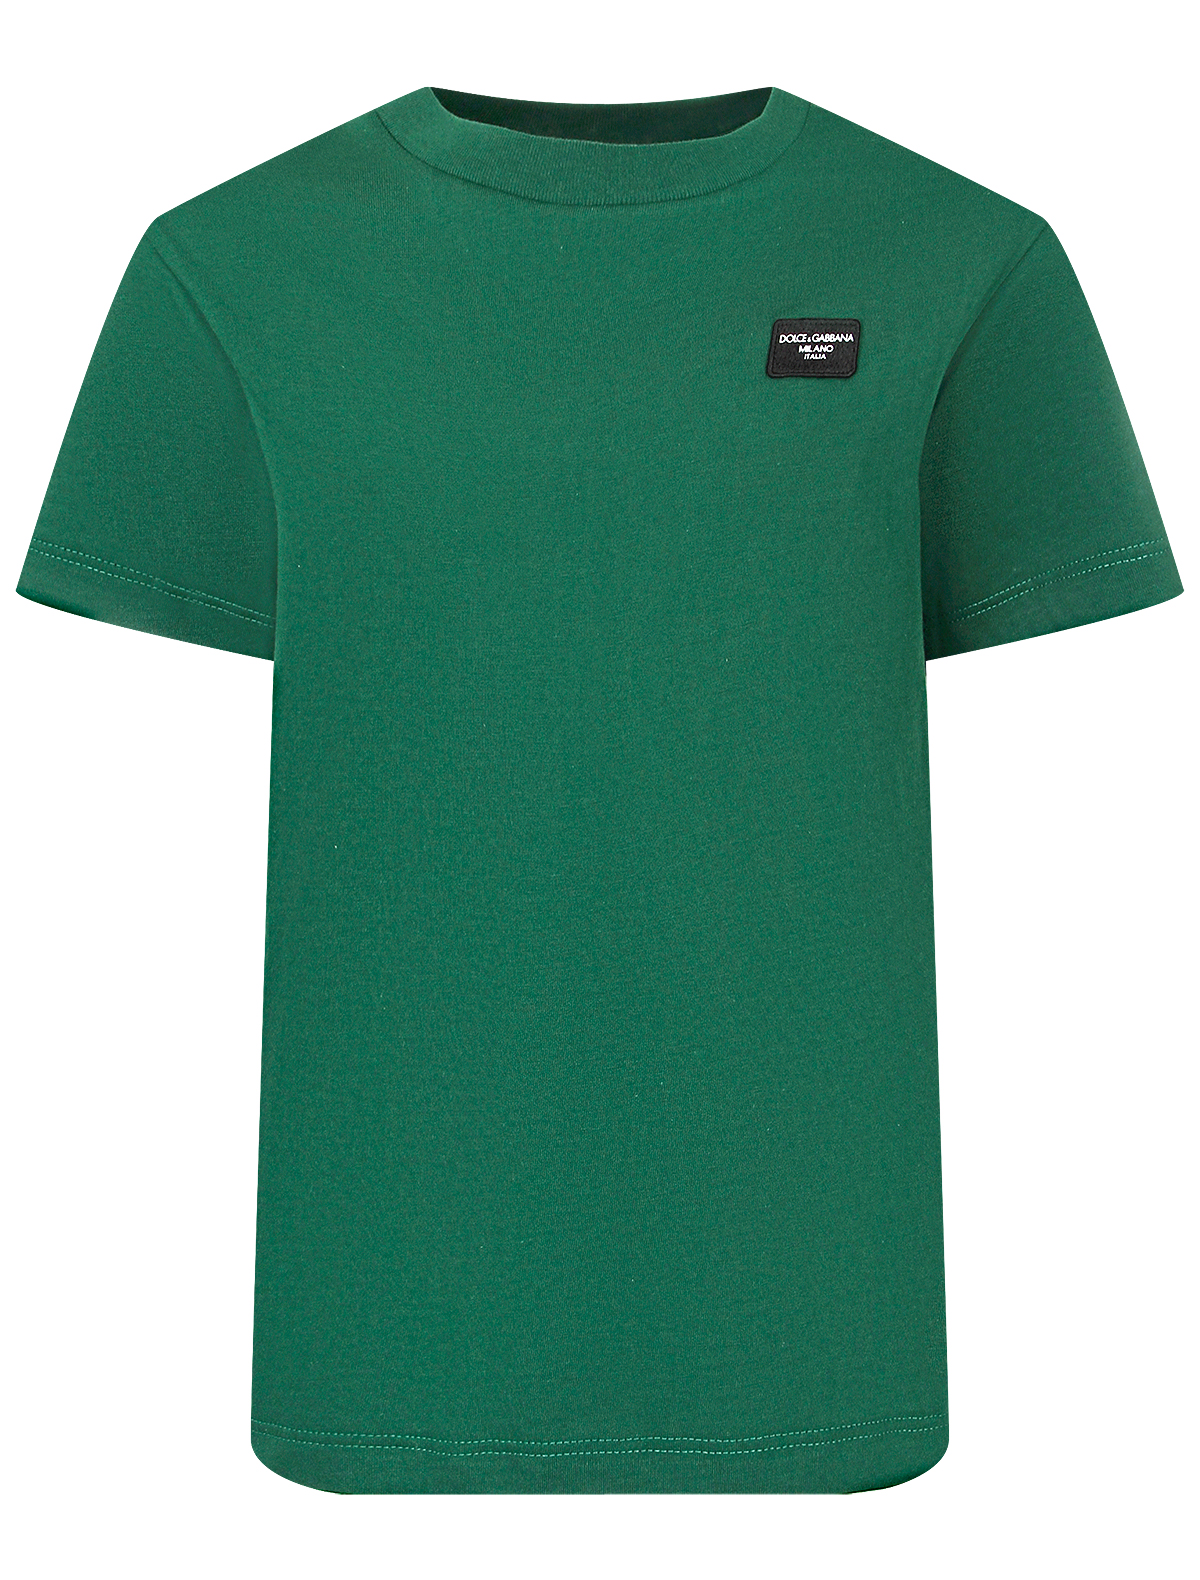 футболка dolce & gabbana для мальчика, зеленая